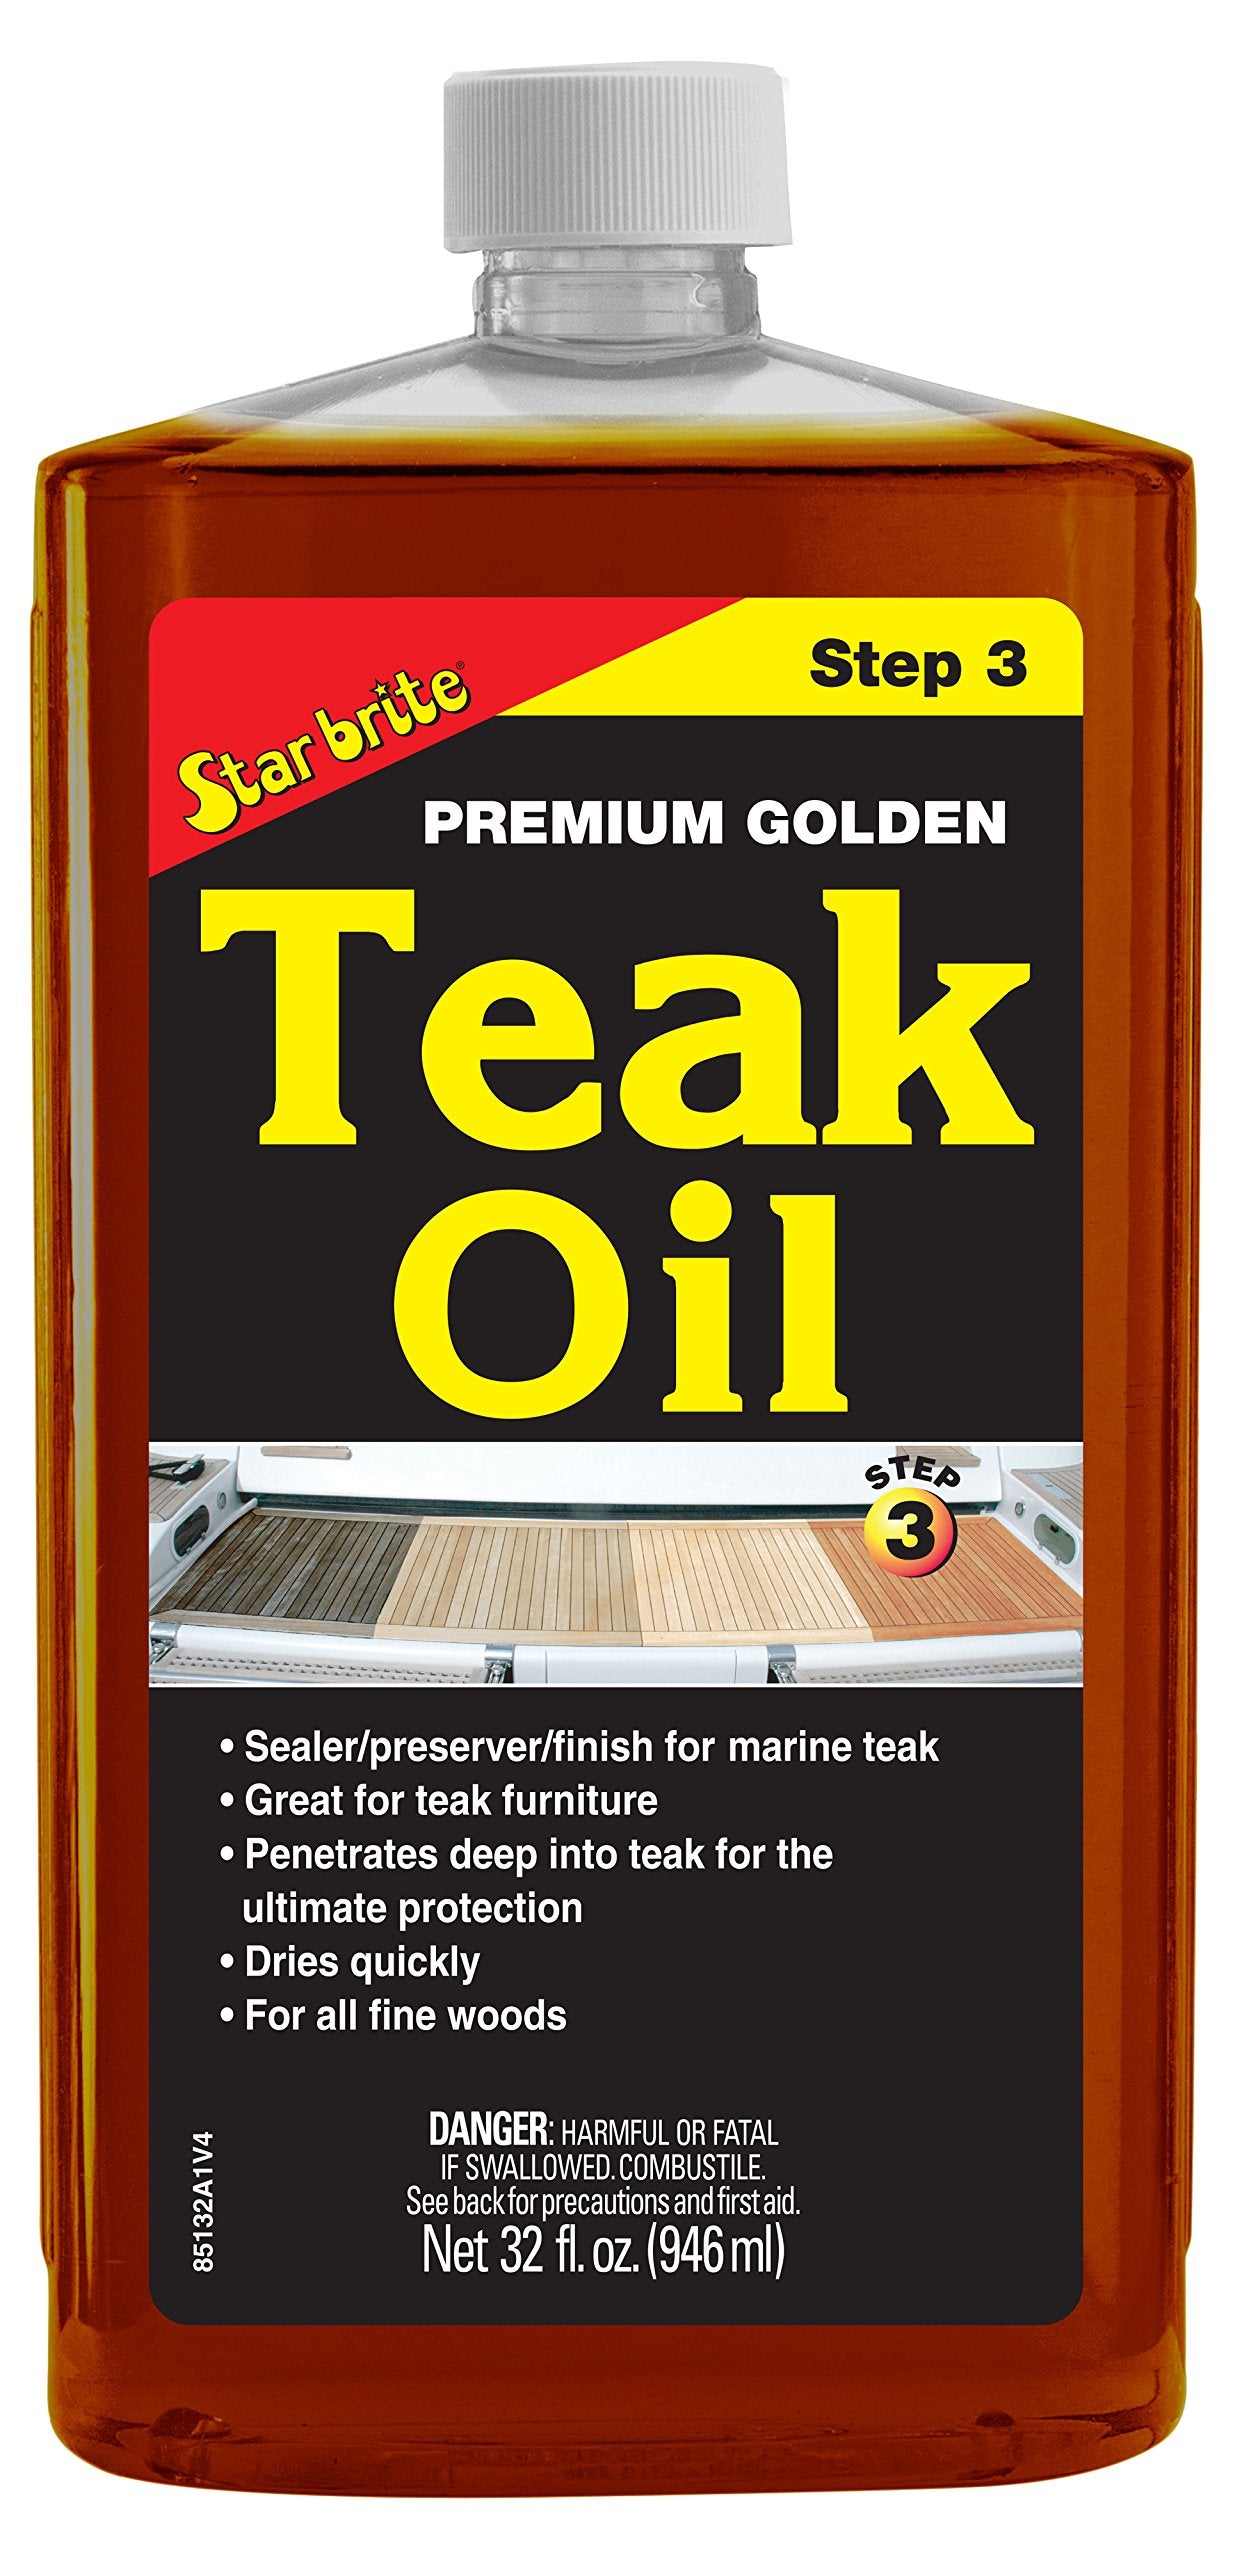 Starbrite Premium Golden Teak Oil 32oz 85132